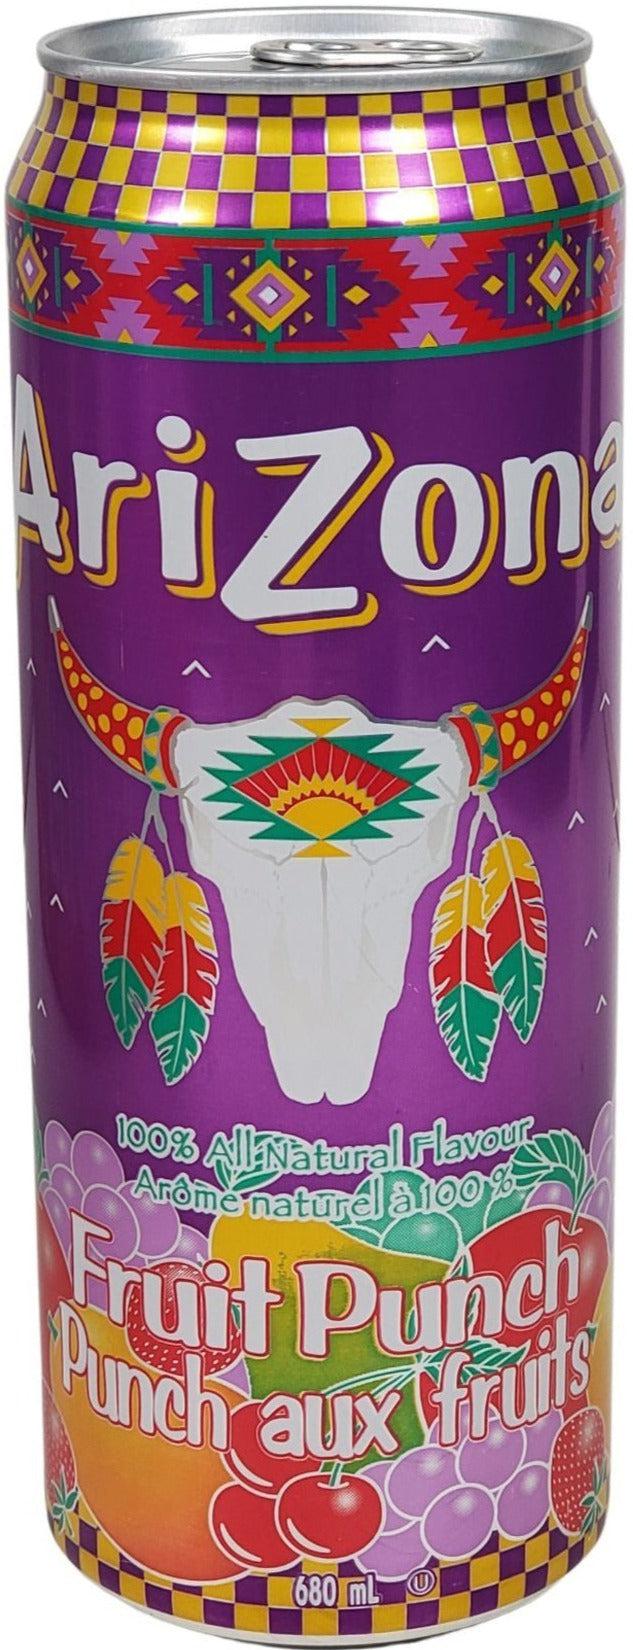 Arizona - Iced Tea - Fruit Punch - Cans